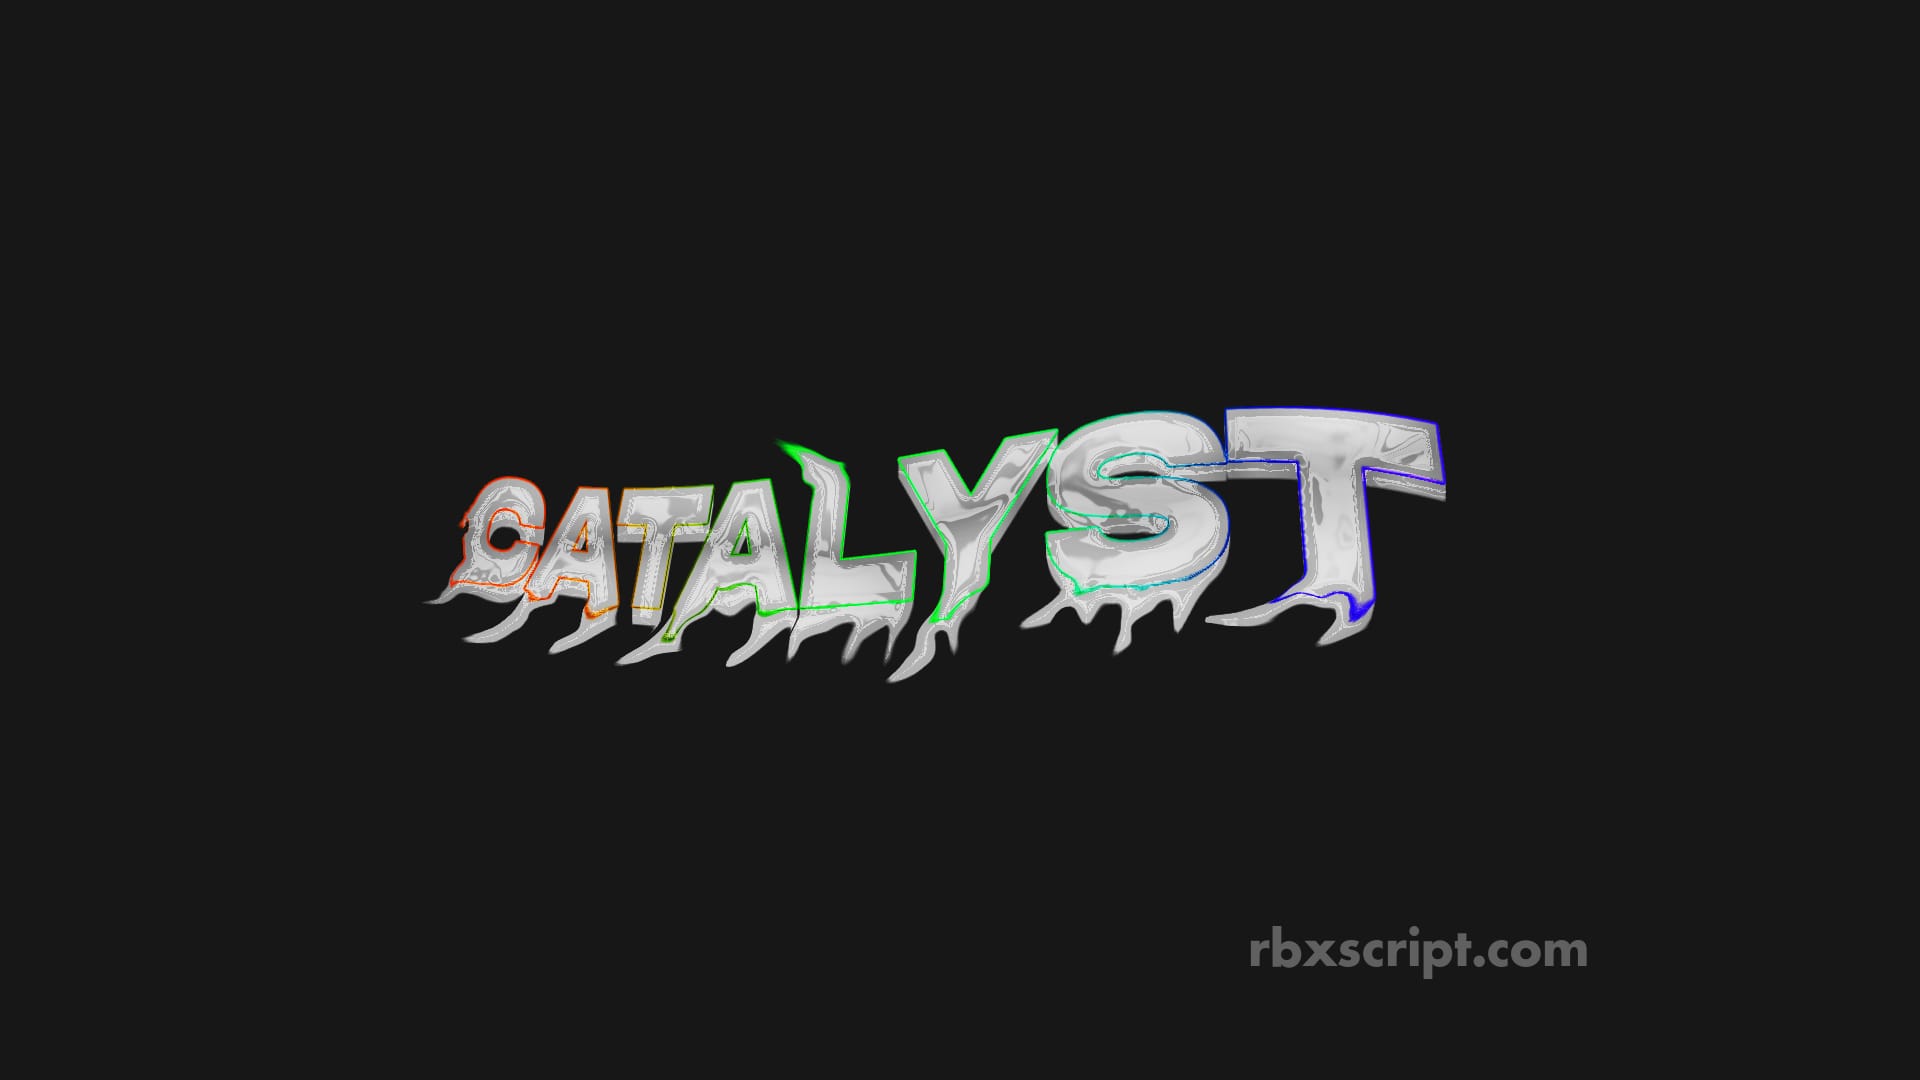 Catalyst Hub: 4 Games